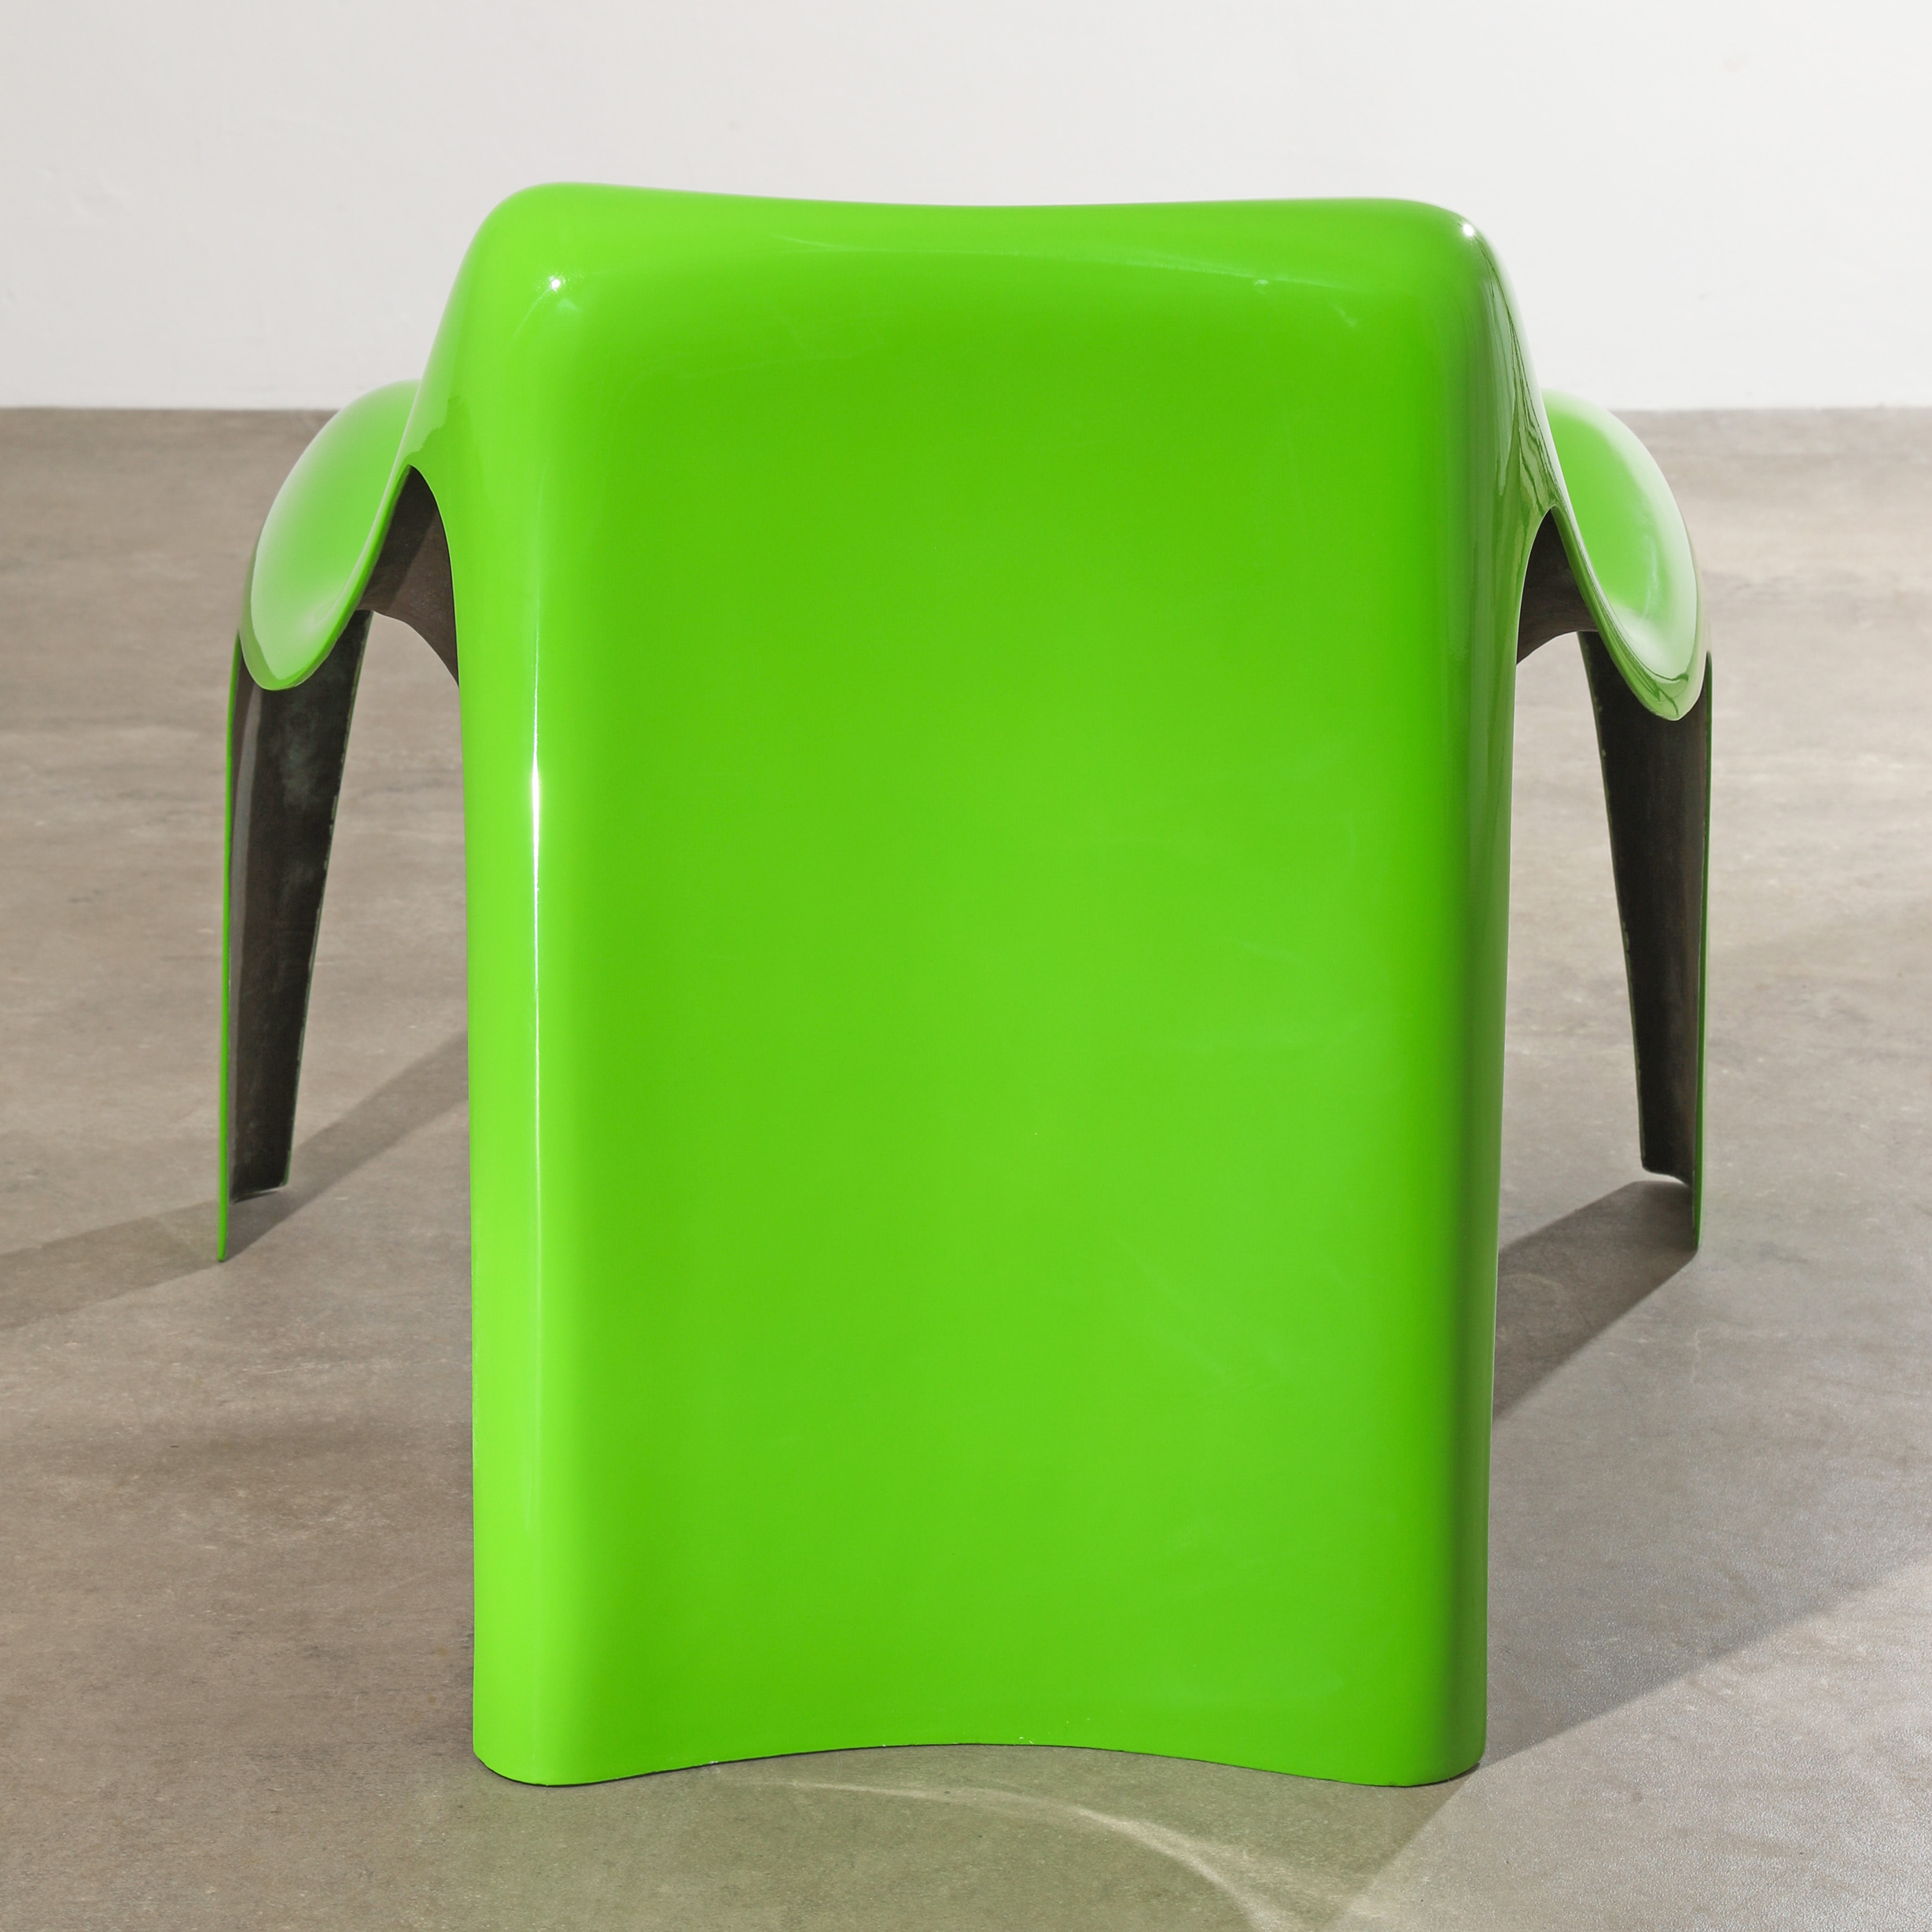 Luigi Colani, rare fiberglass Lounge Chair from a small series - Image 4 of 5